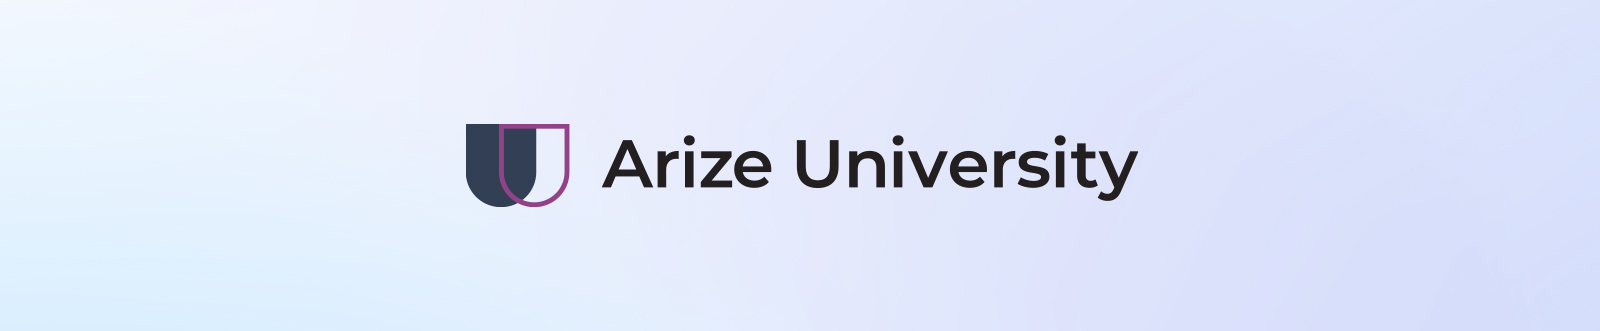 Arize University